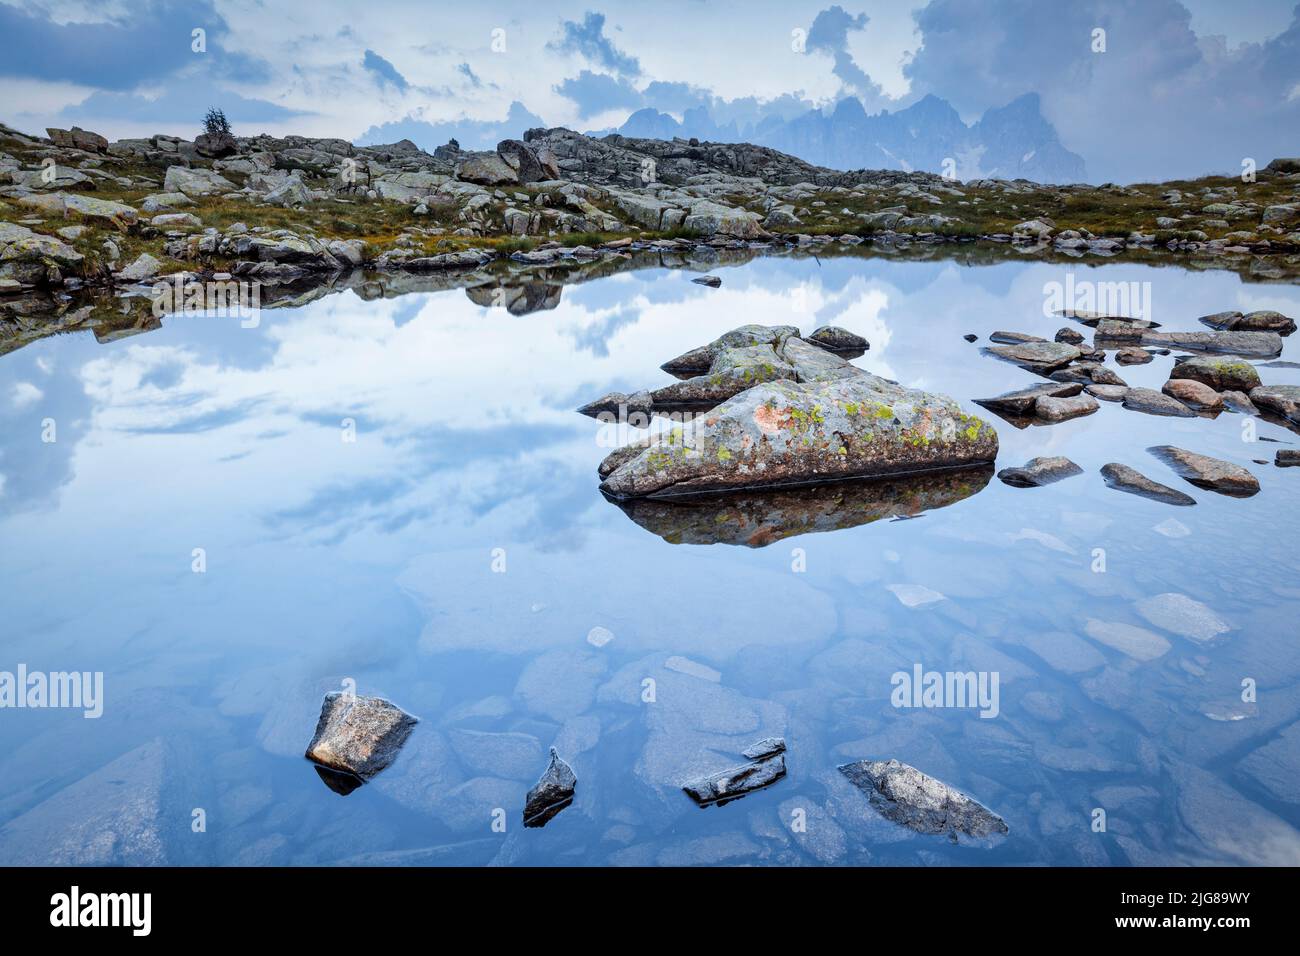 Italy, Trentino, Trento province, little alpine humid area, pond, lakes of Juribrutto Stock Photo